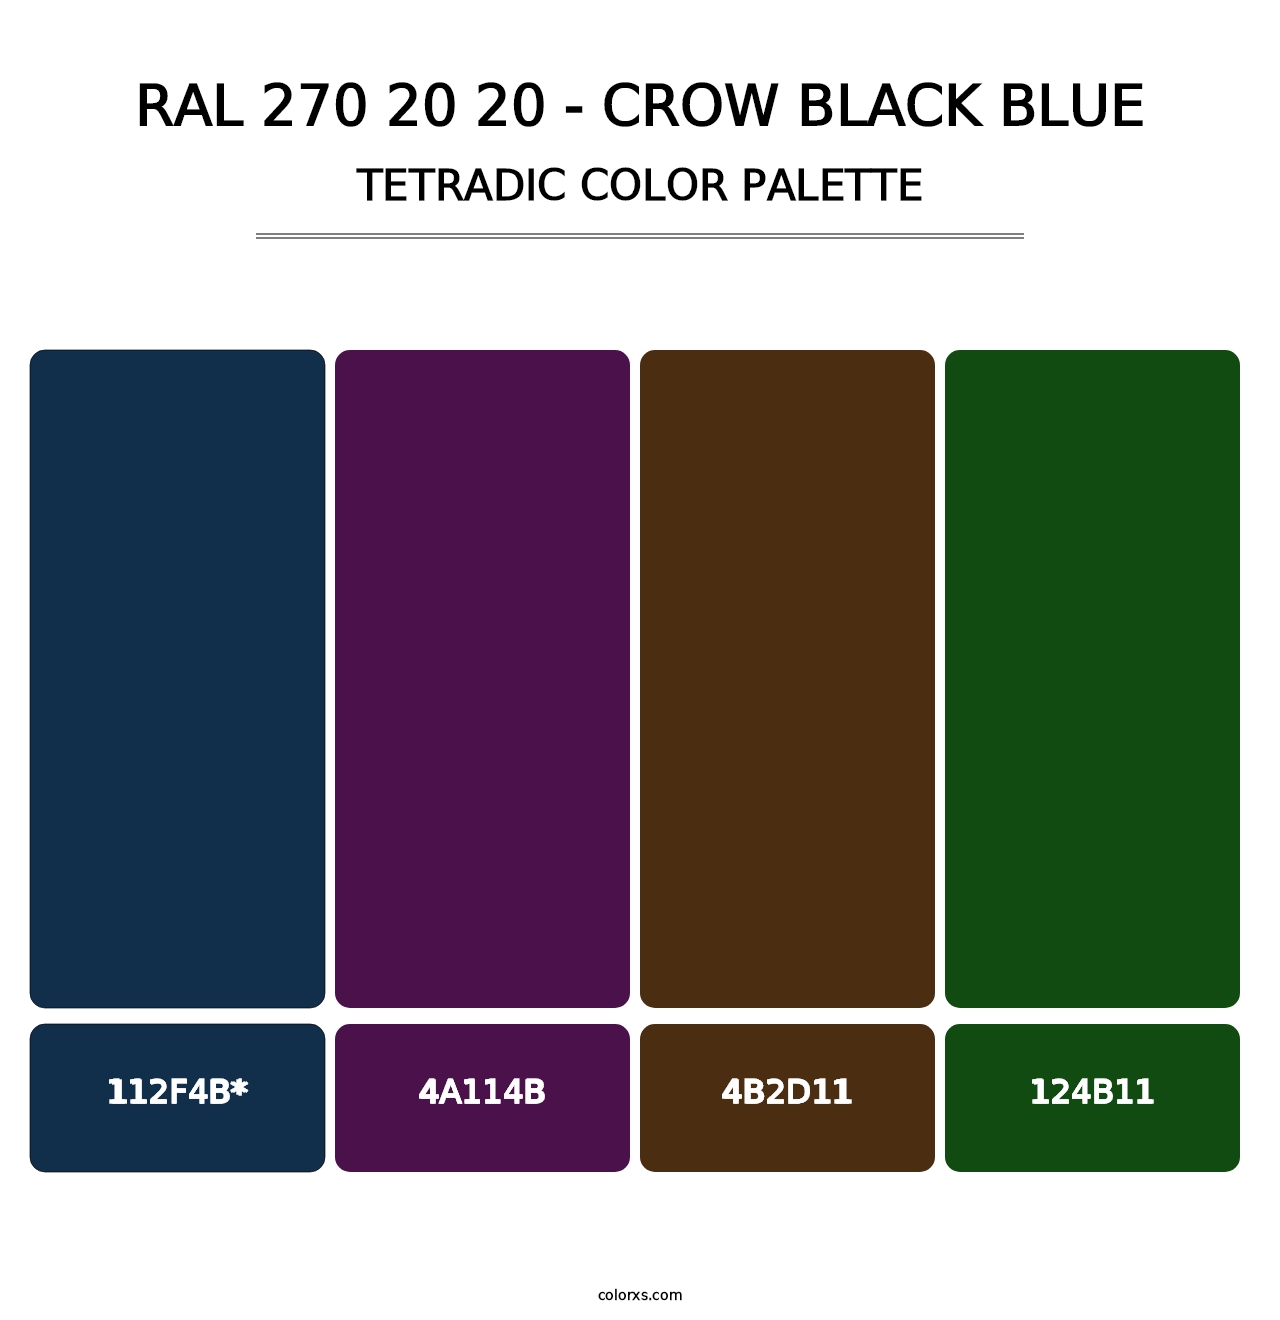 RAL 270 20 20 - Crow Black Blue - Tetradic Color Palette